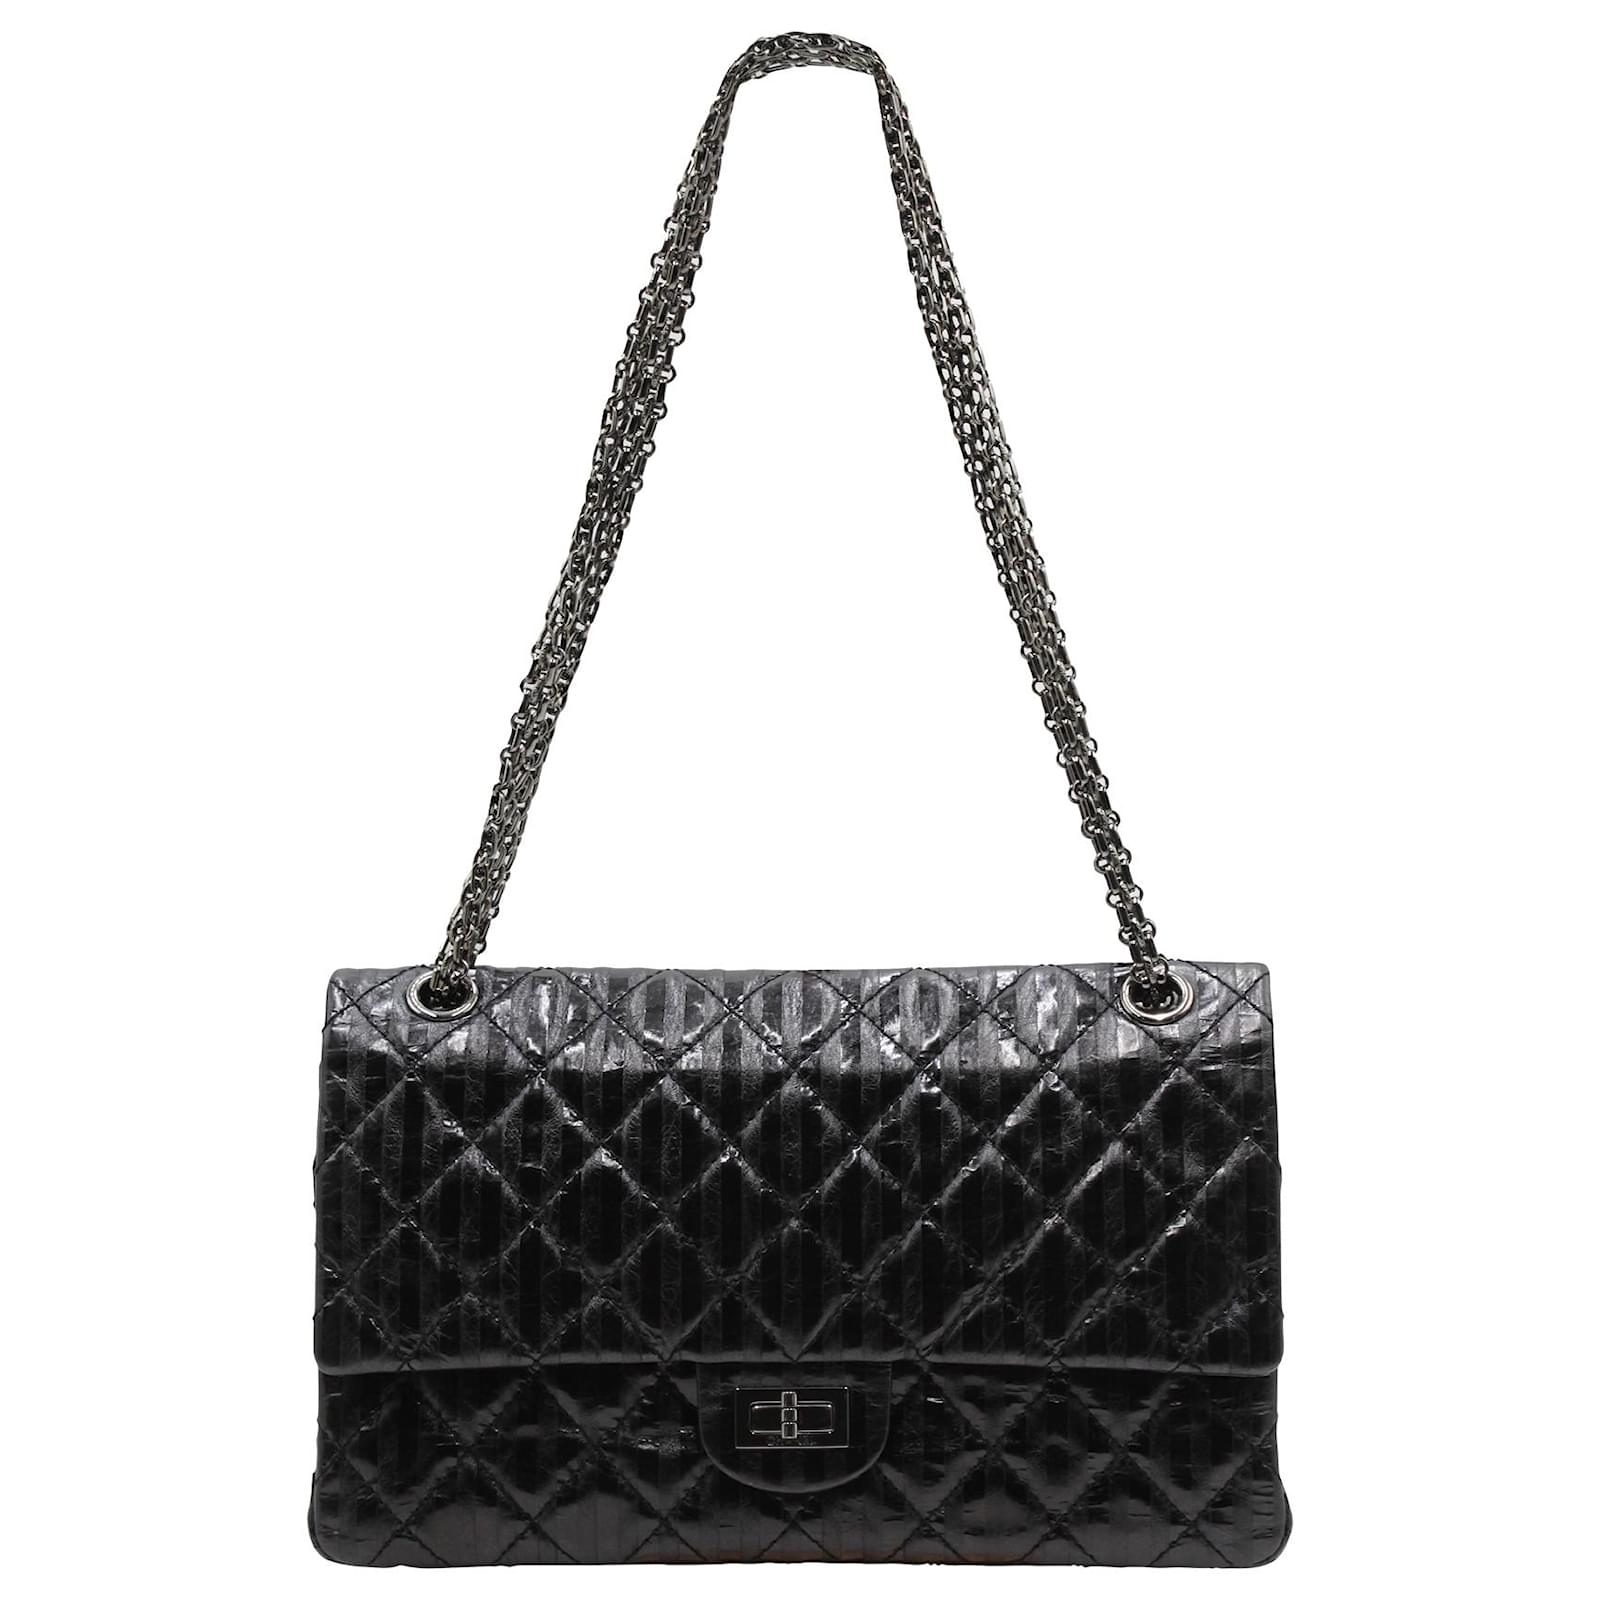 Handbags Chanel Chanel Reissue 2.55 Flap Bag in Striped Black Lambskin Leather